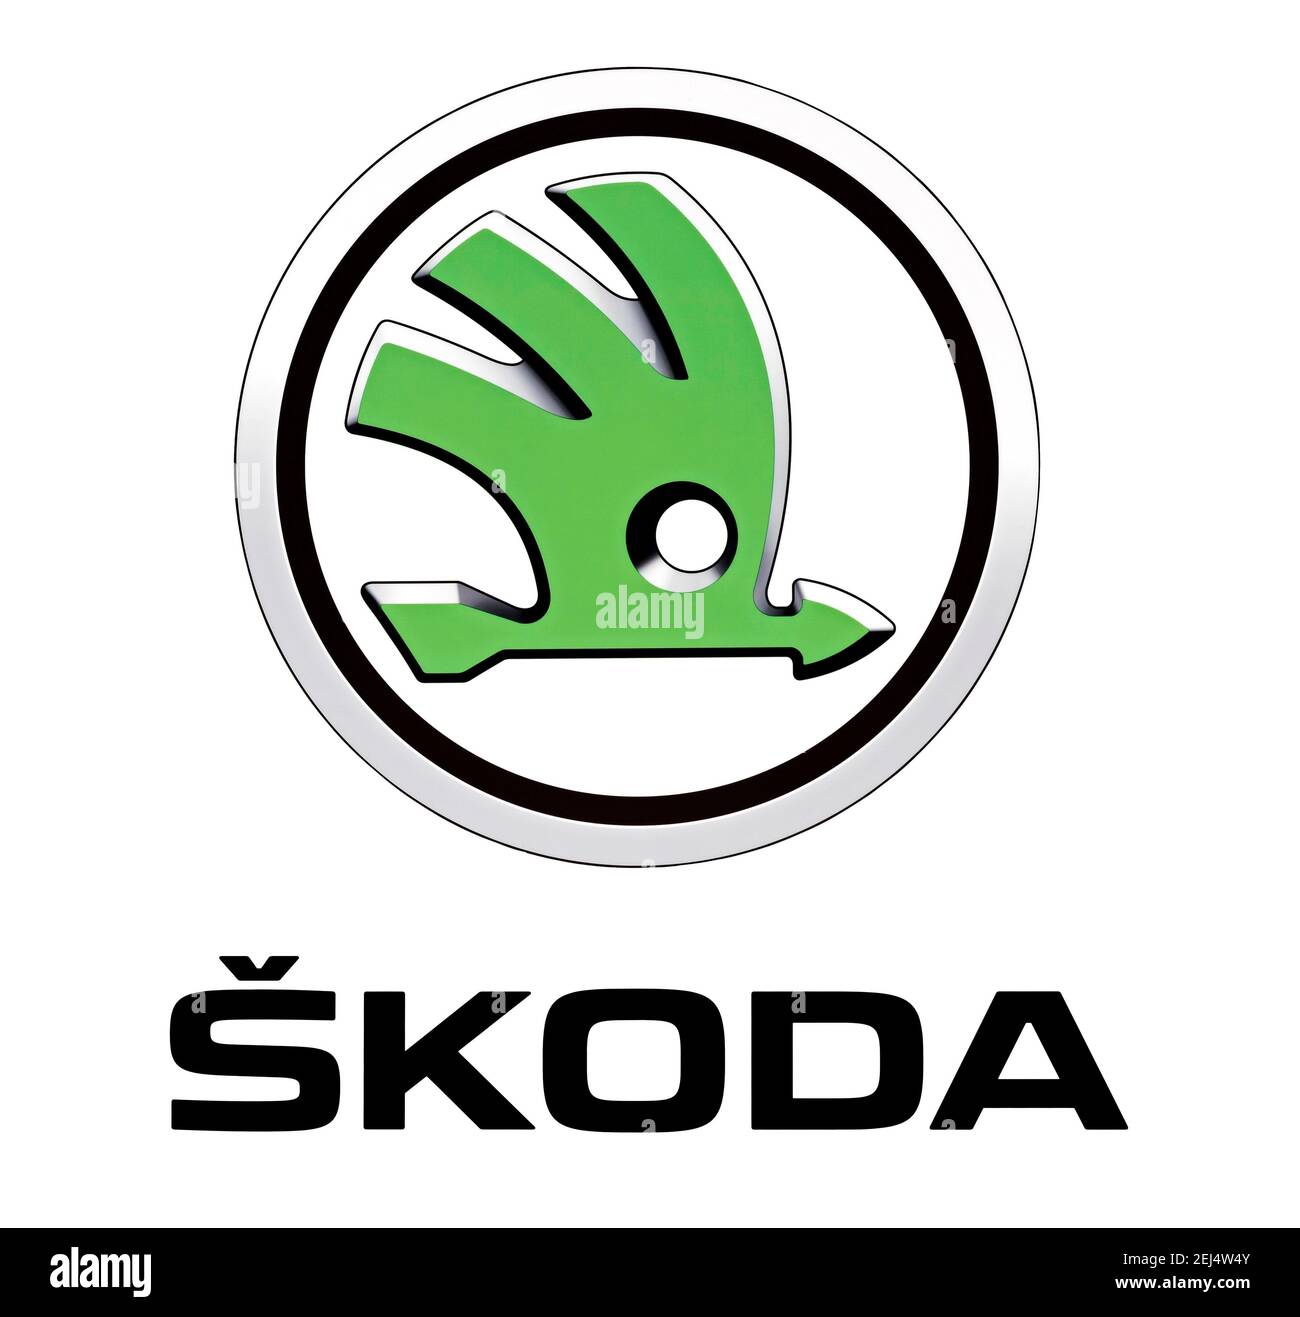 Logo of the car brand Skoda, free space on white background Stock Photo